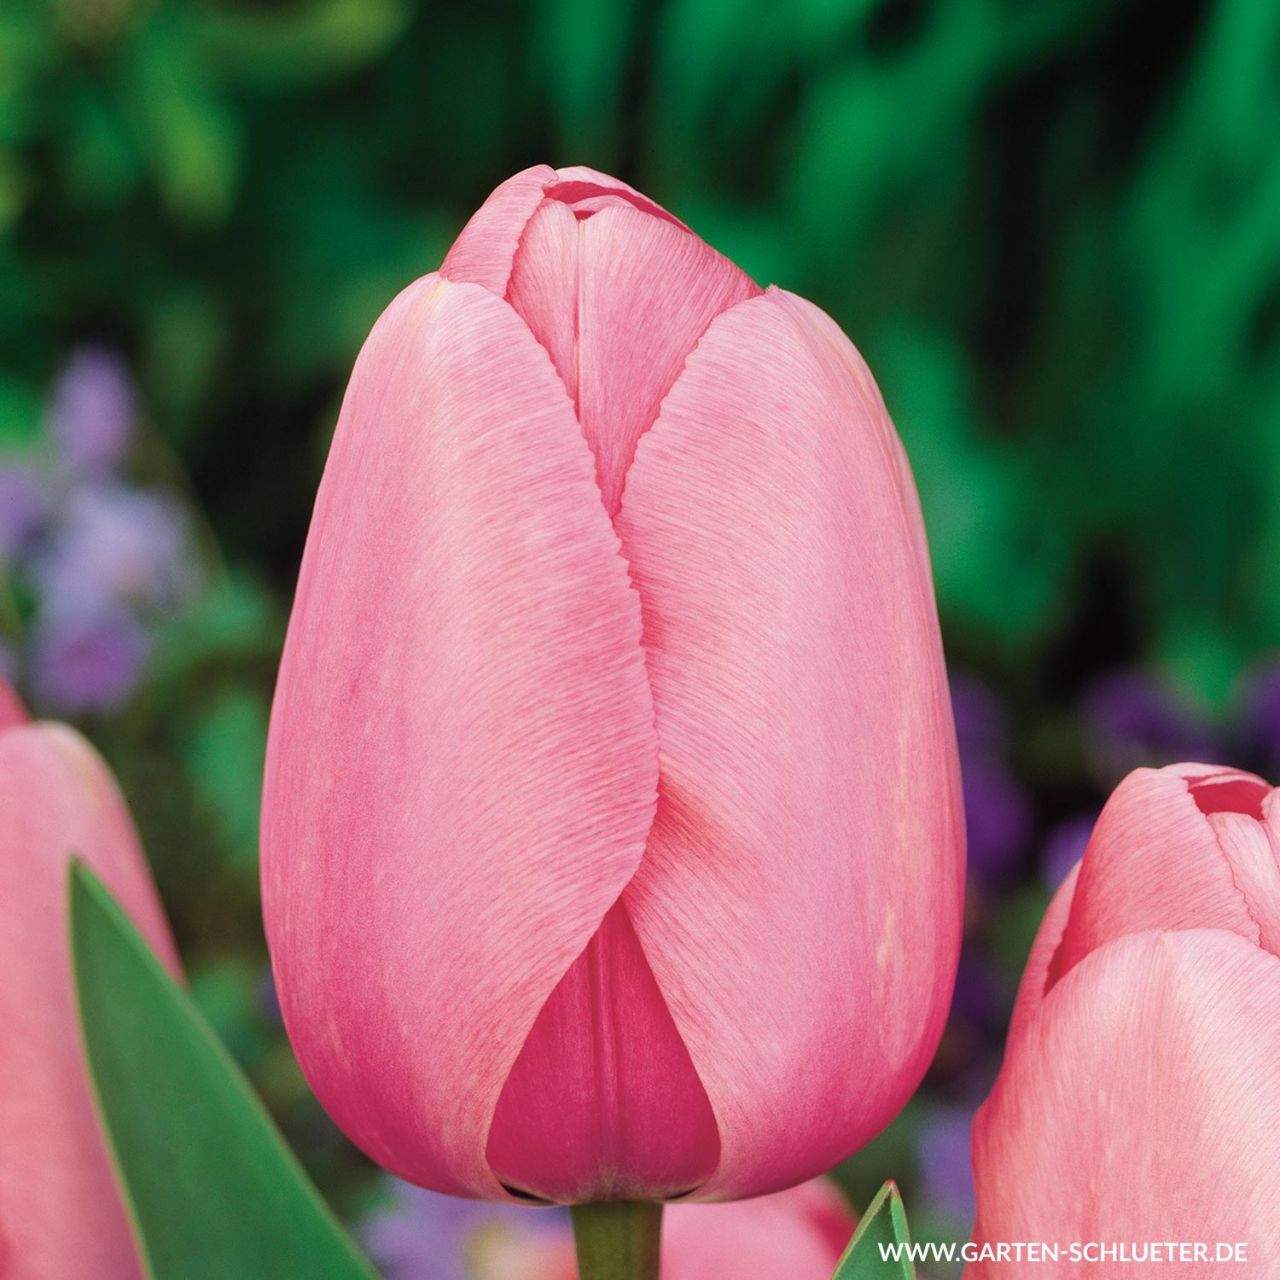 1 Darwin Hybrid Tulpe Pink Impression 10 Stueck Tulipa Pink Impression 1280x1280